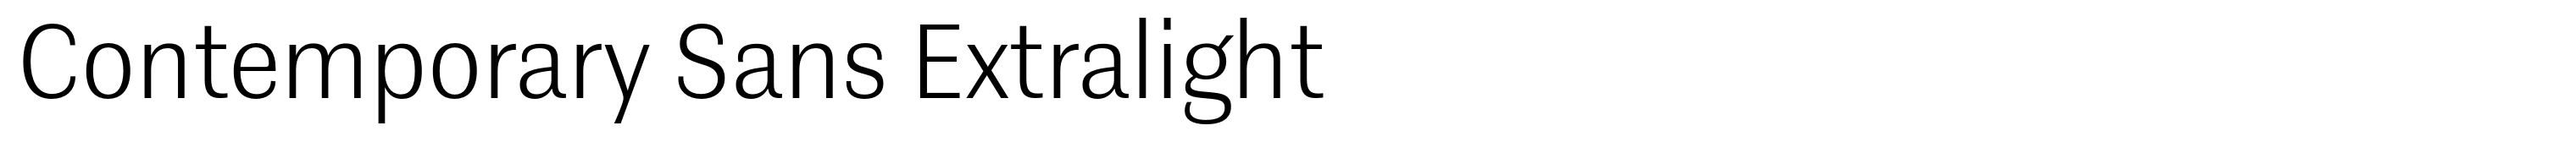 Contemporary Sans Extralight